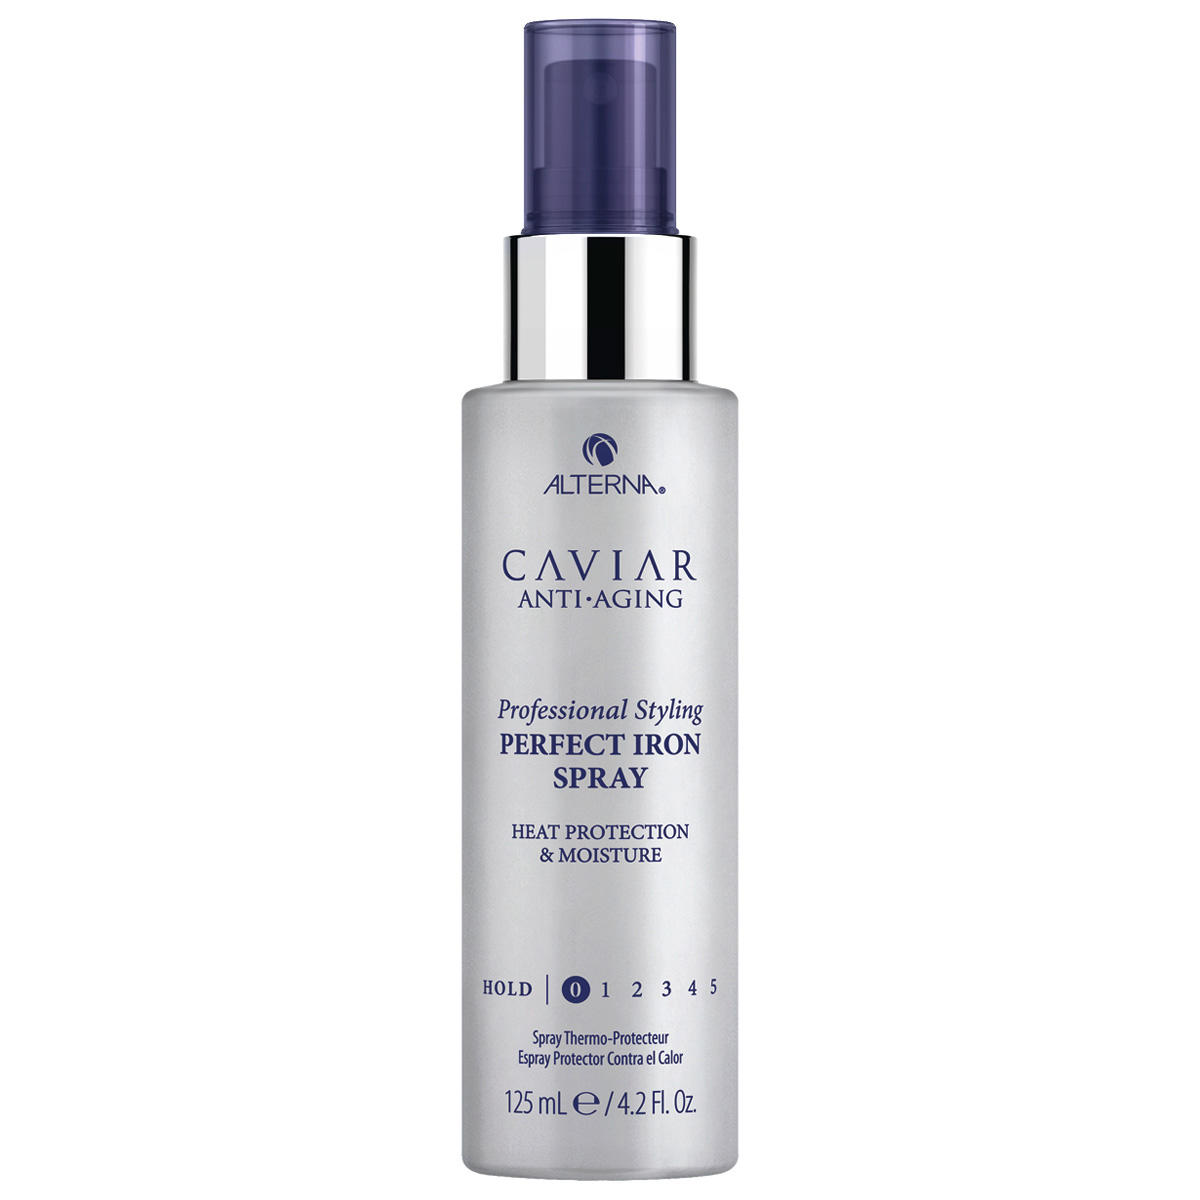 Alterna Caviar Anti-Aging Professional Styling Perfect Iron Spray 125 ml - 1